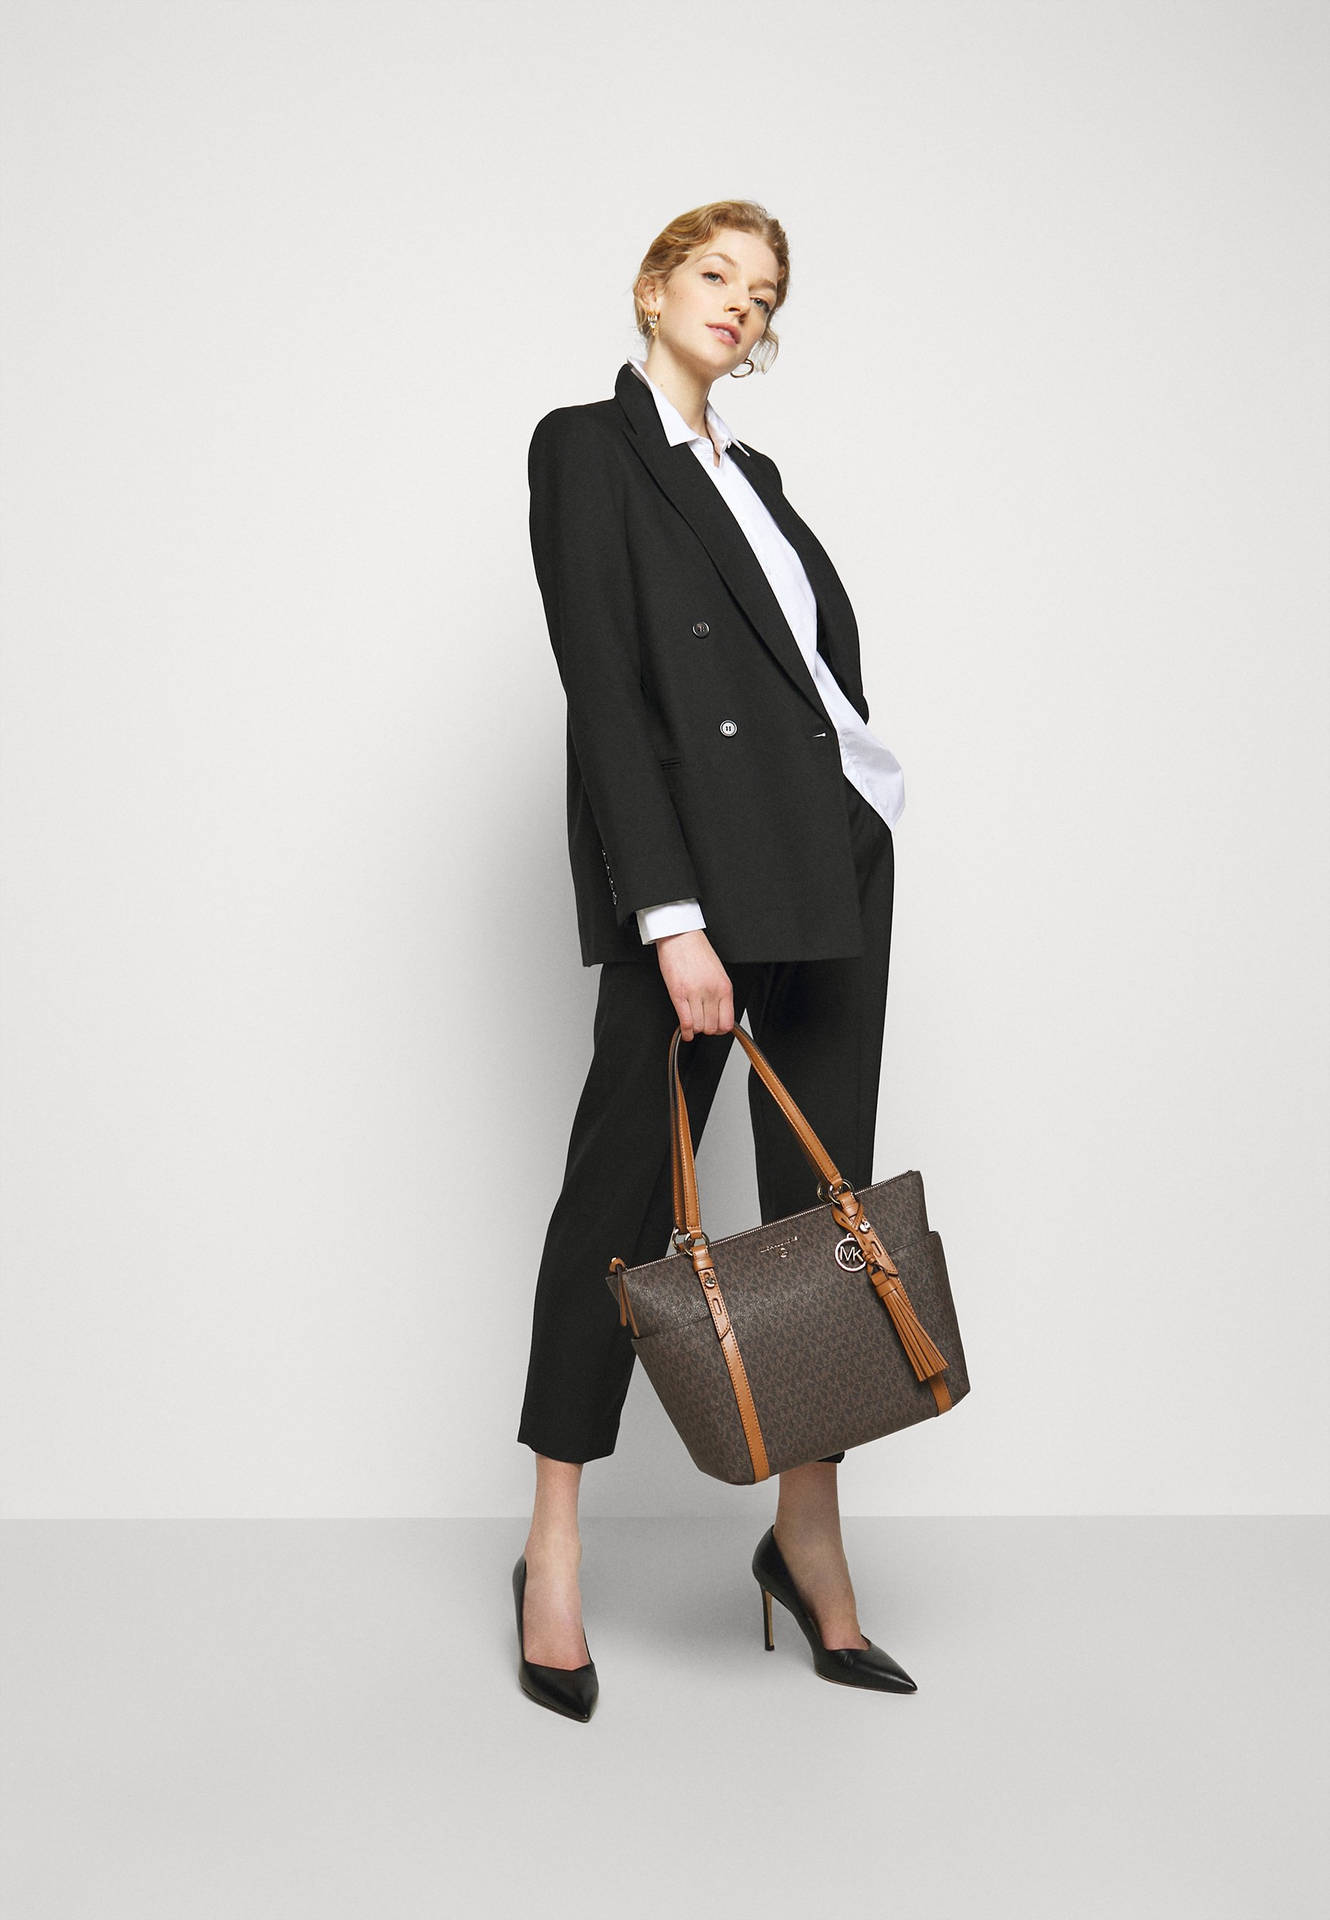 Michael Kors Bag With Female Model Background